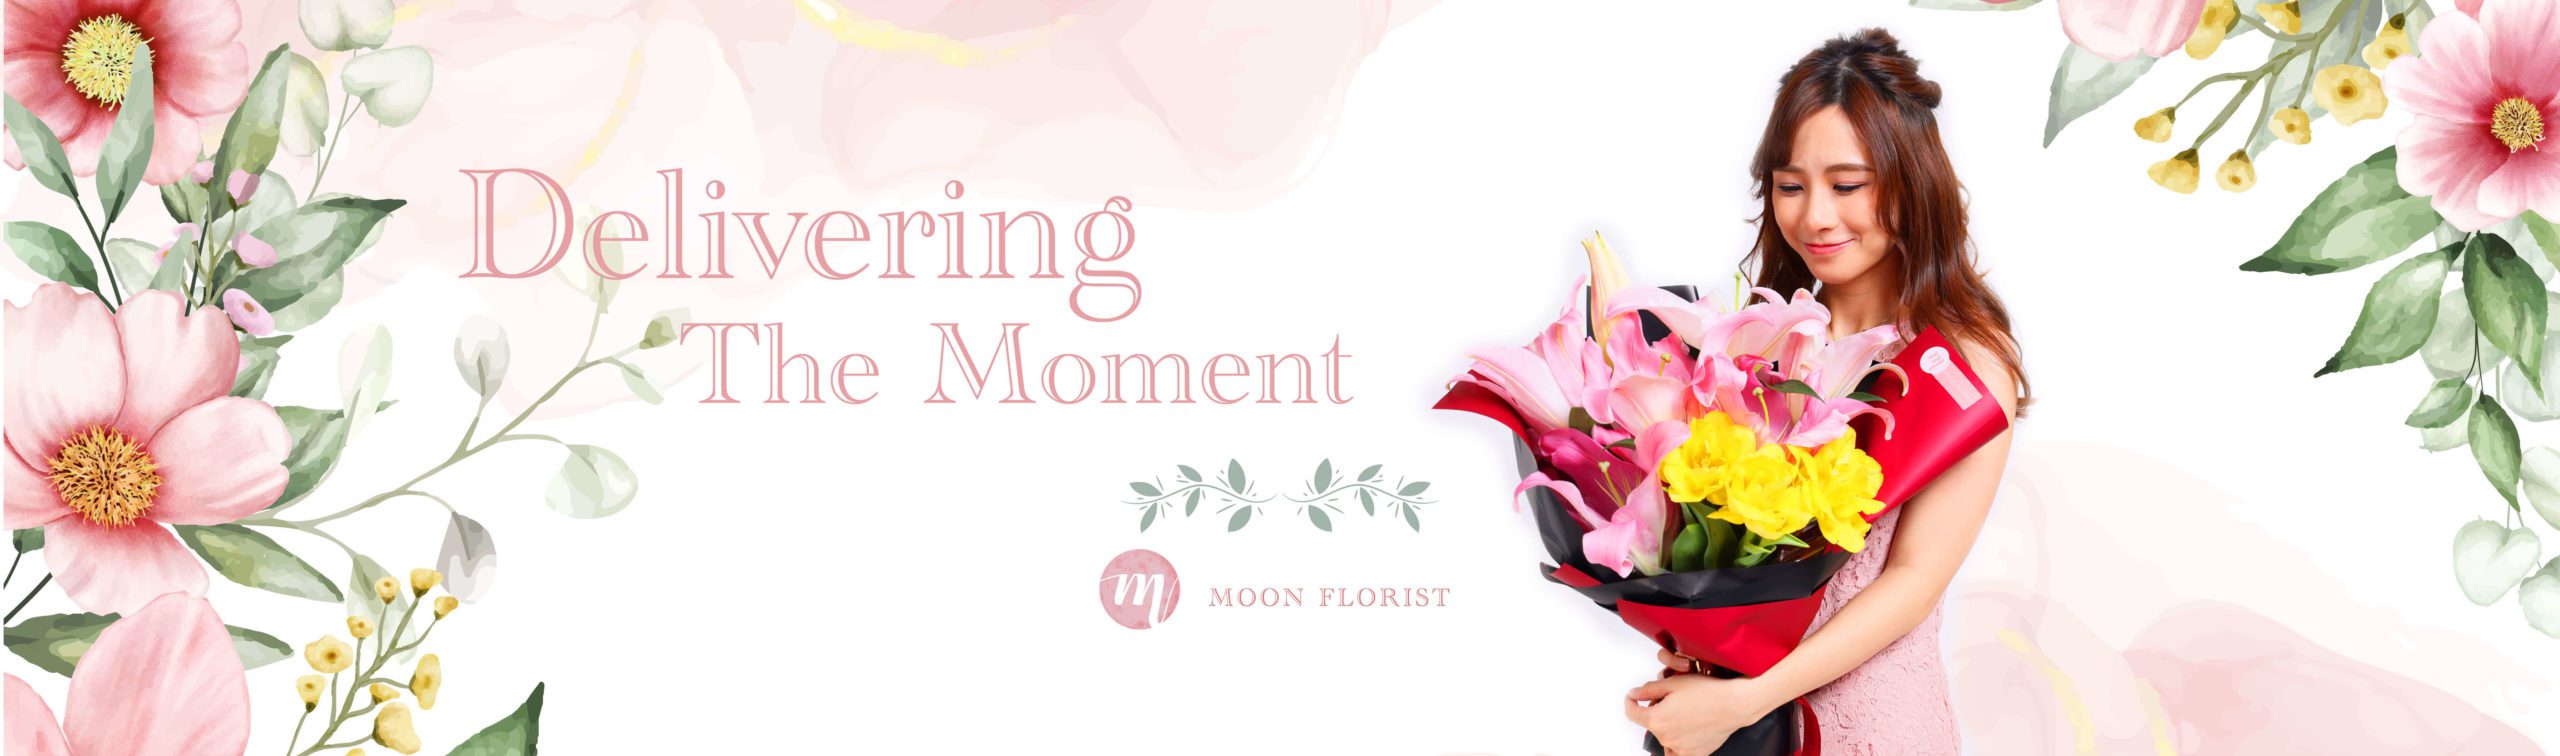 母親節花束, 母親節花, Moon Florist -model banner